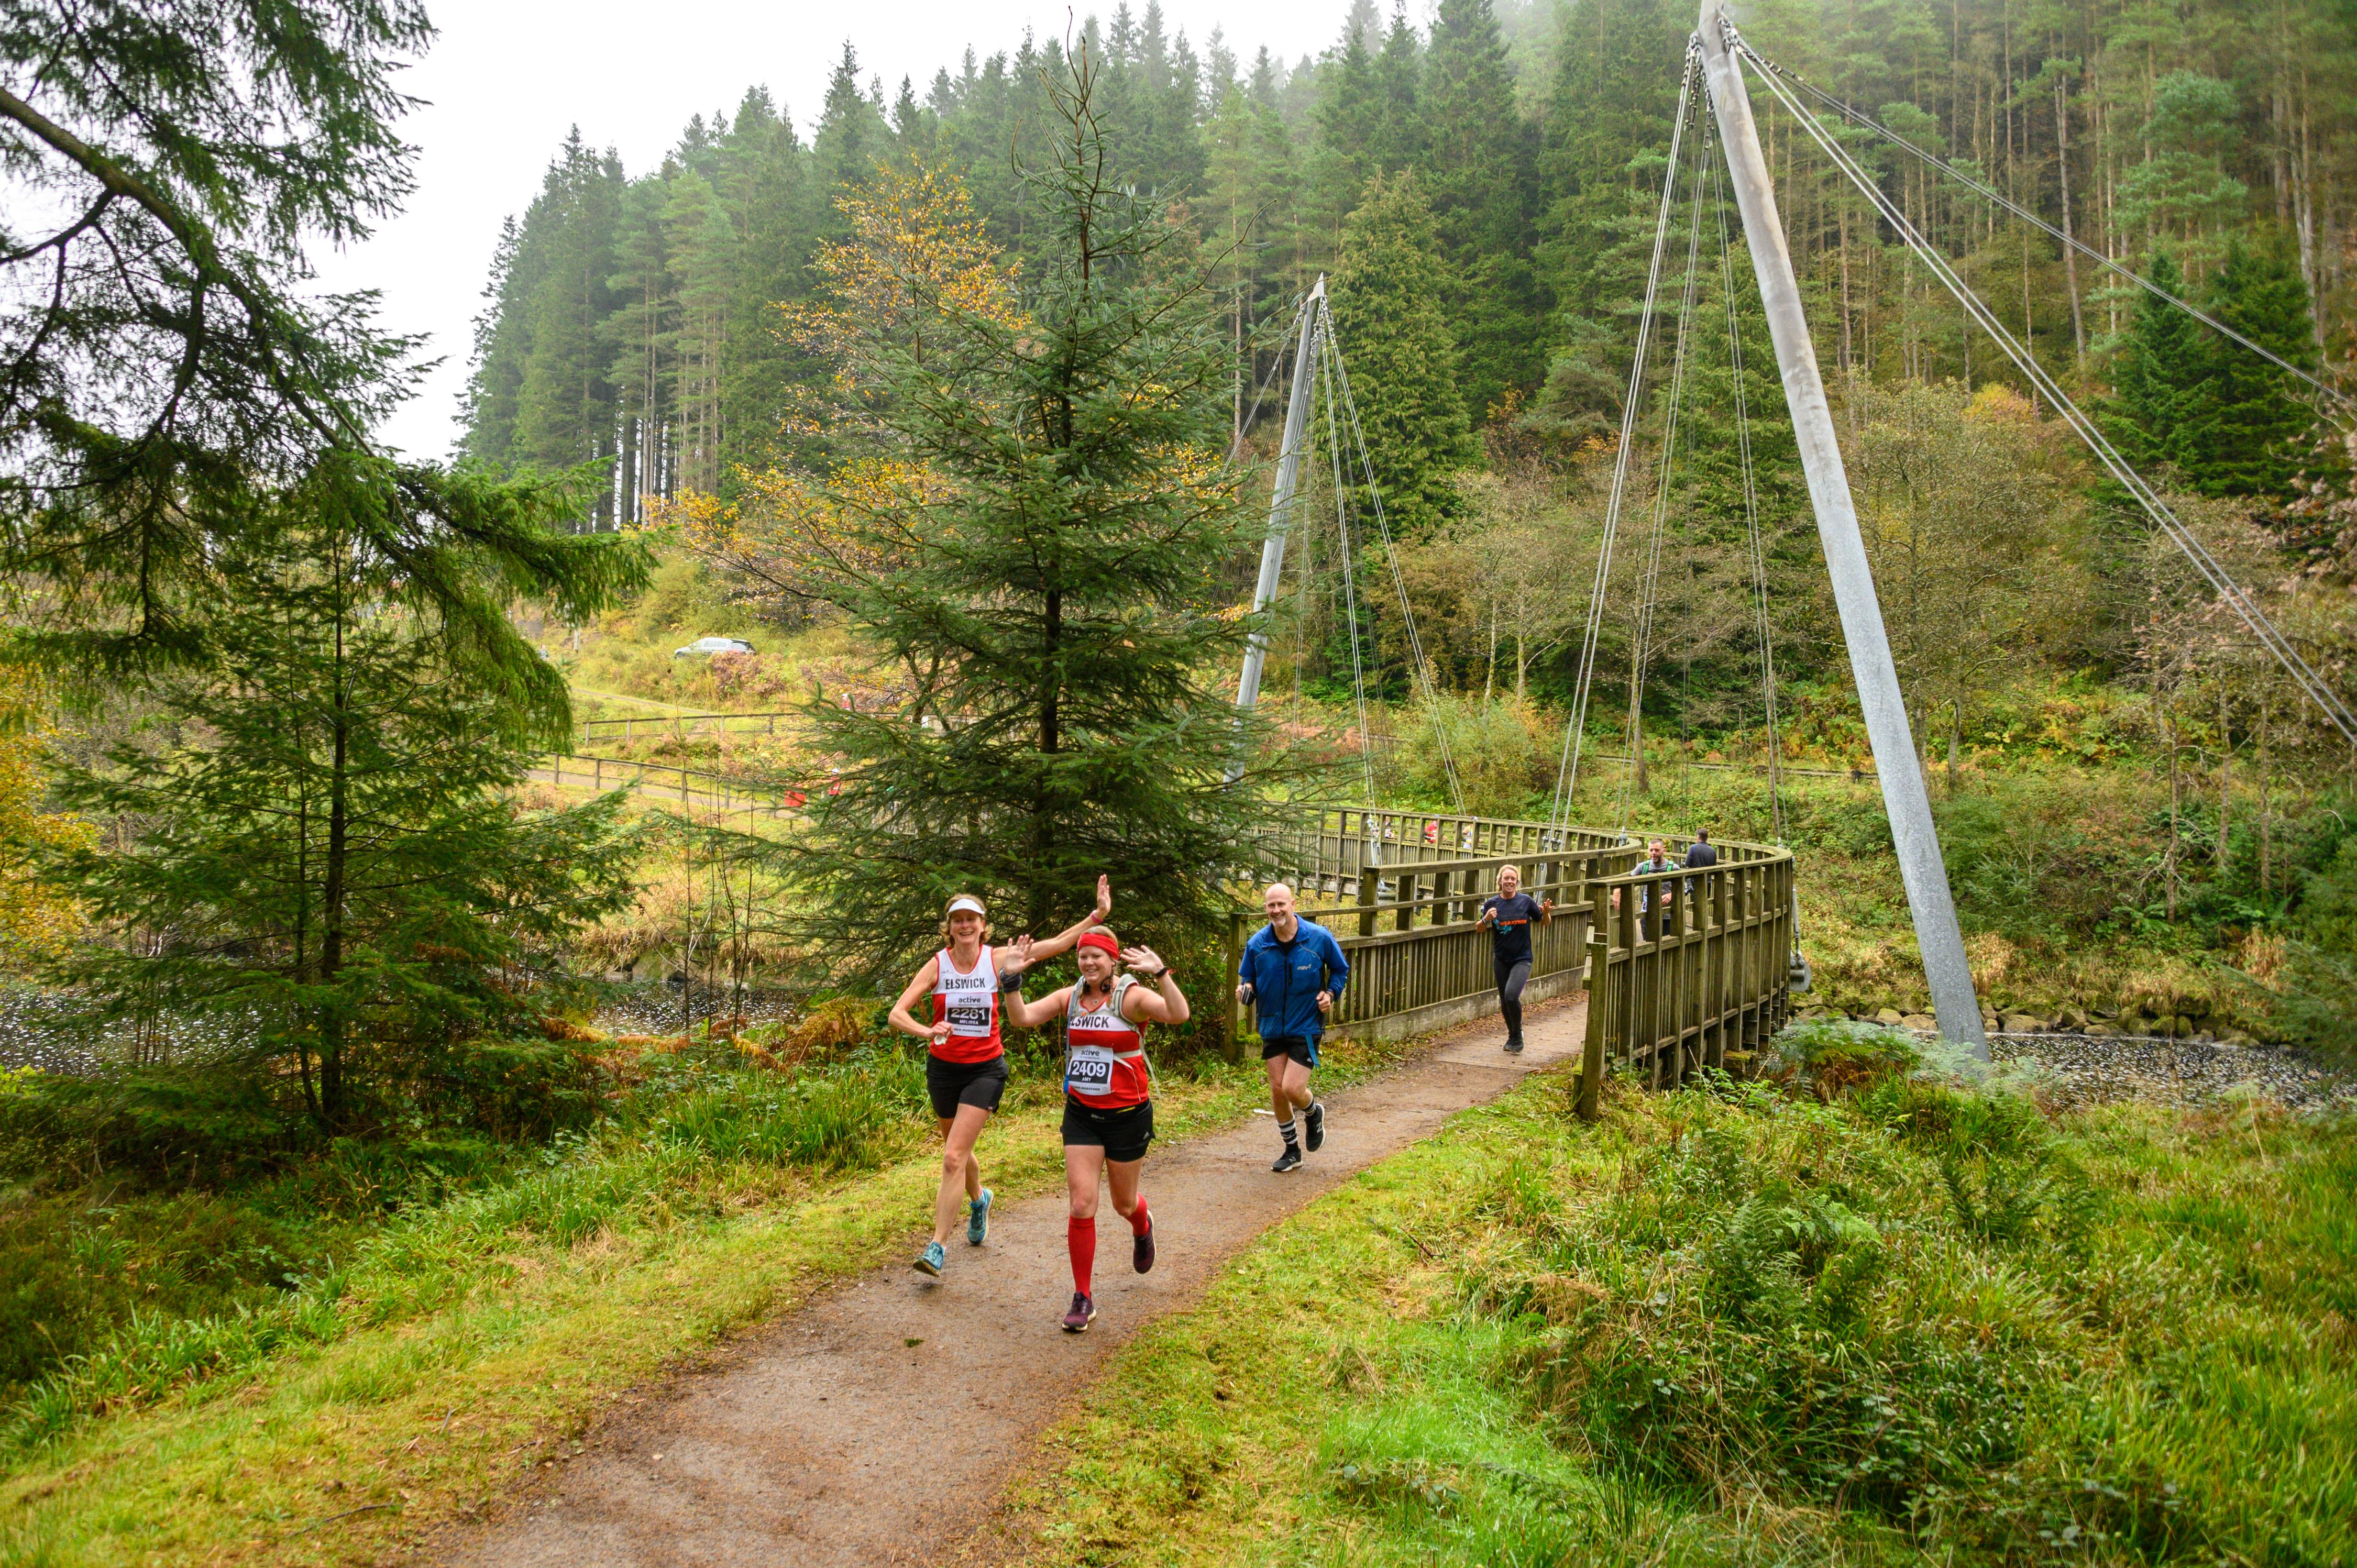 Autumn marathons have near perfect conditions